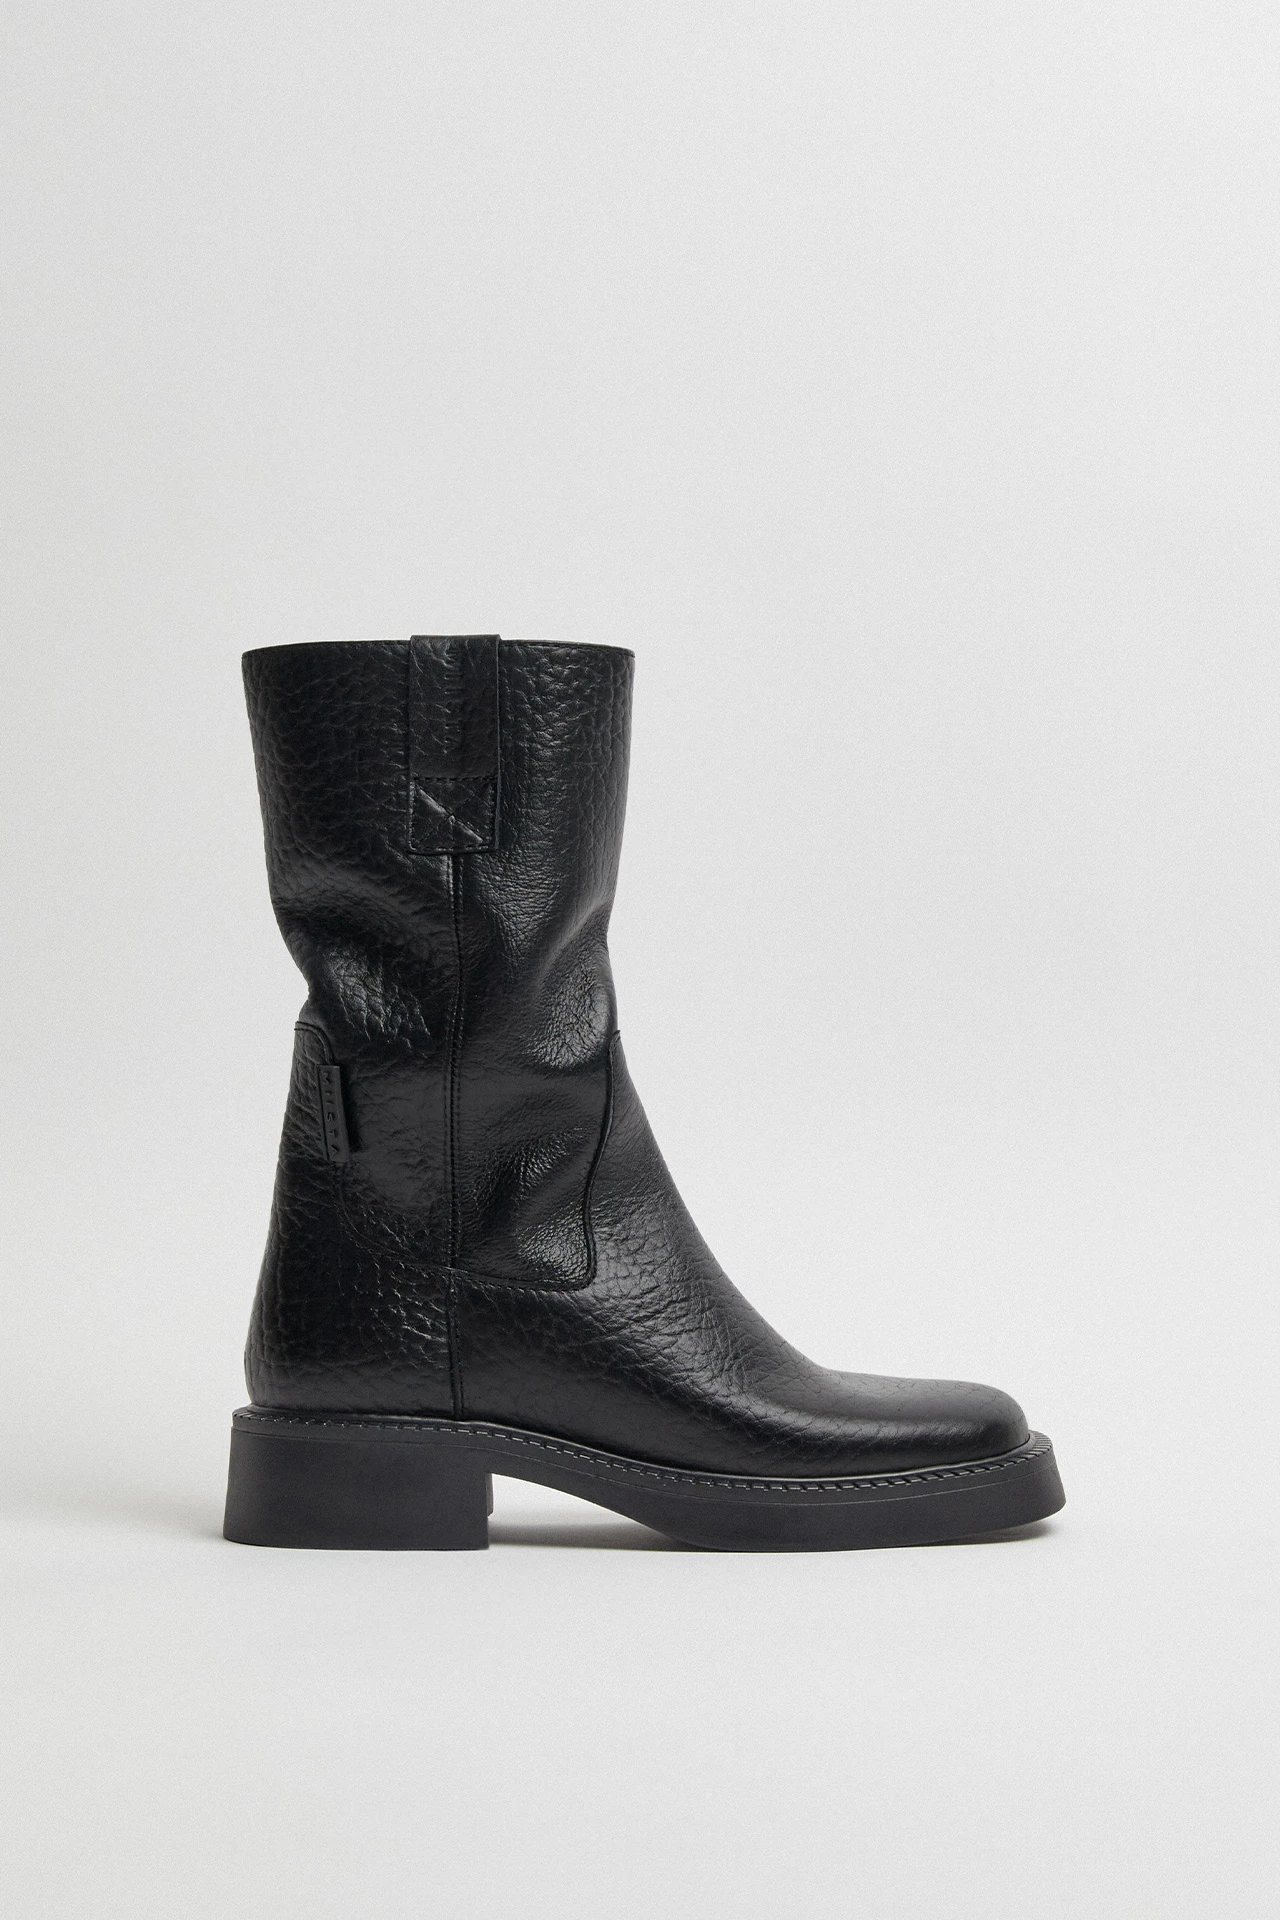 E8-aron-black-boots-01